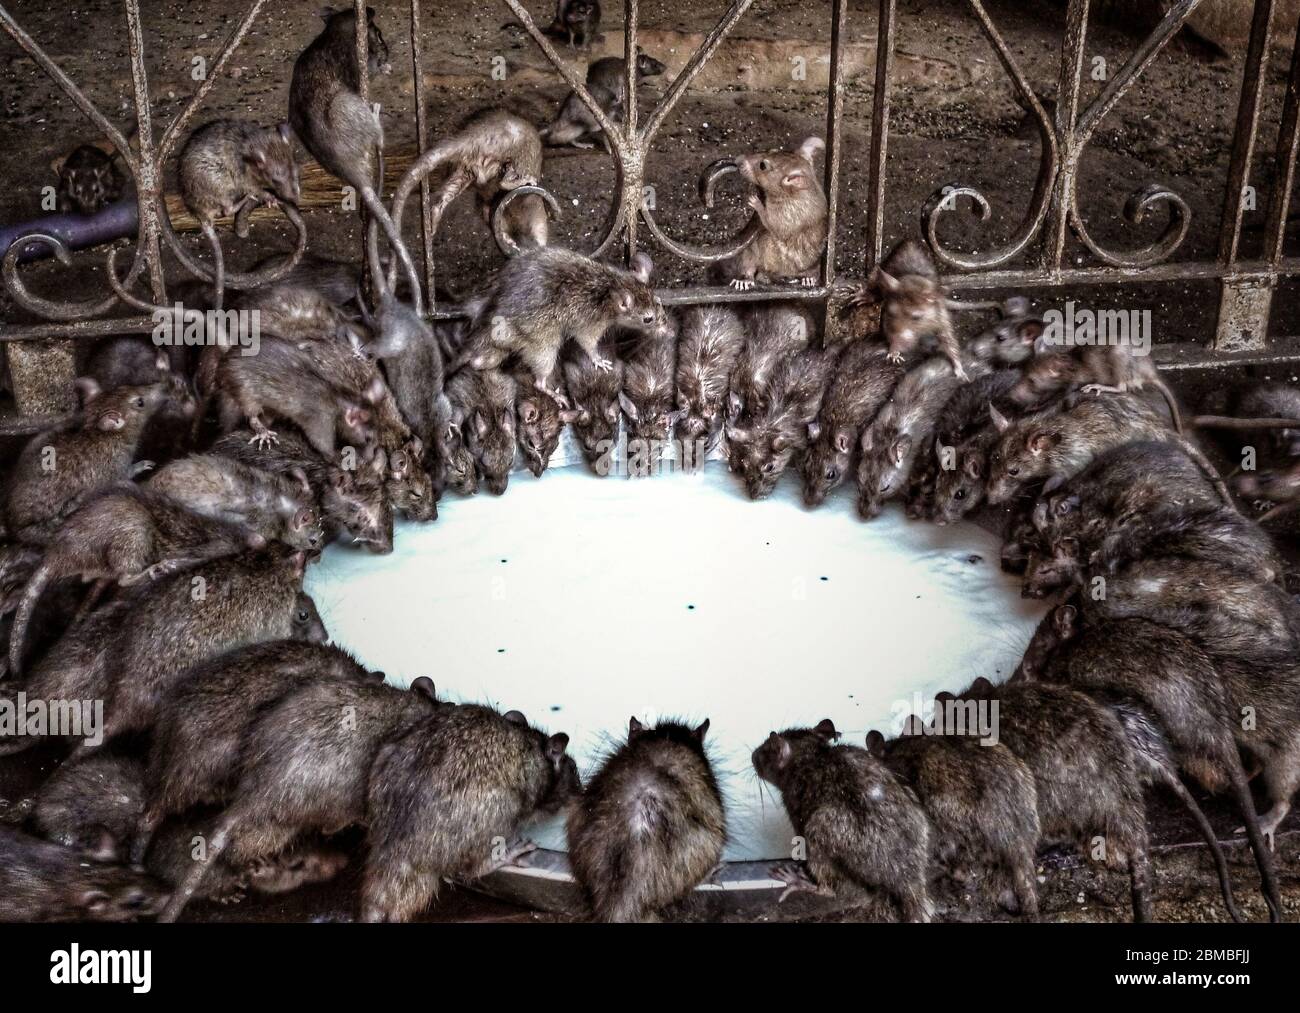 A group of rats (Rattus Rattus) sipping milk given by worshippers at Karni Mata temple, the rat temple in Deshnoke, near Bikaner, Rajasthan, India. Stock Photo